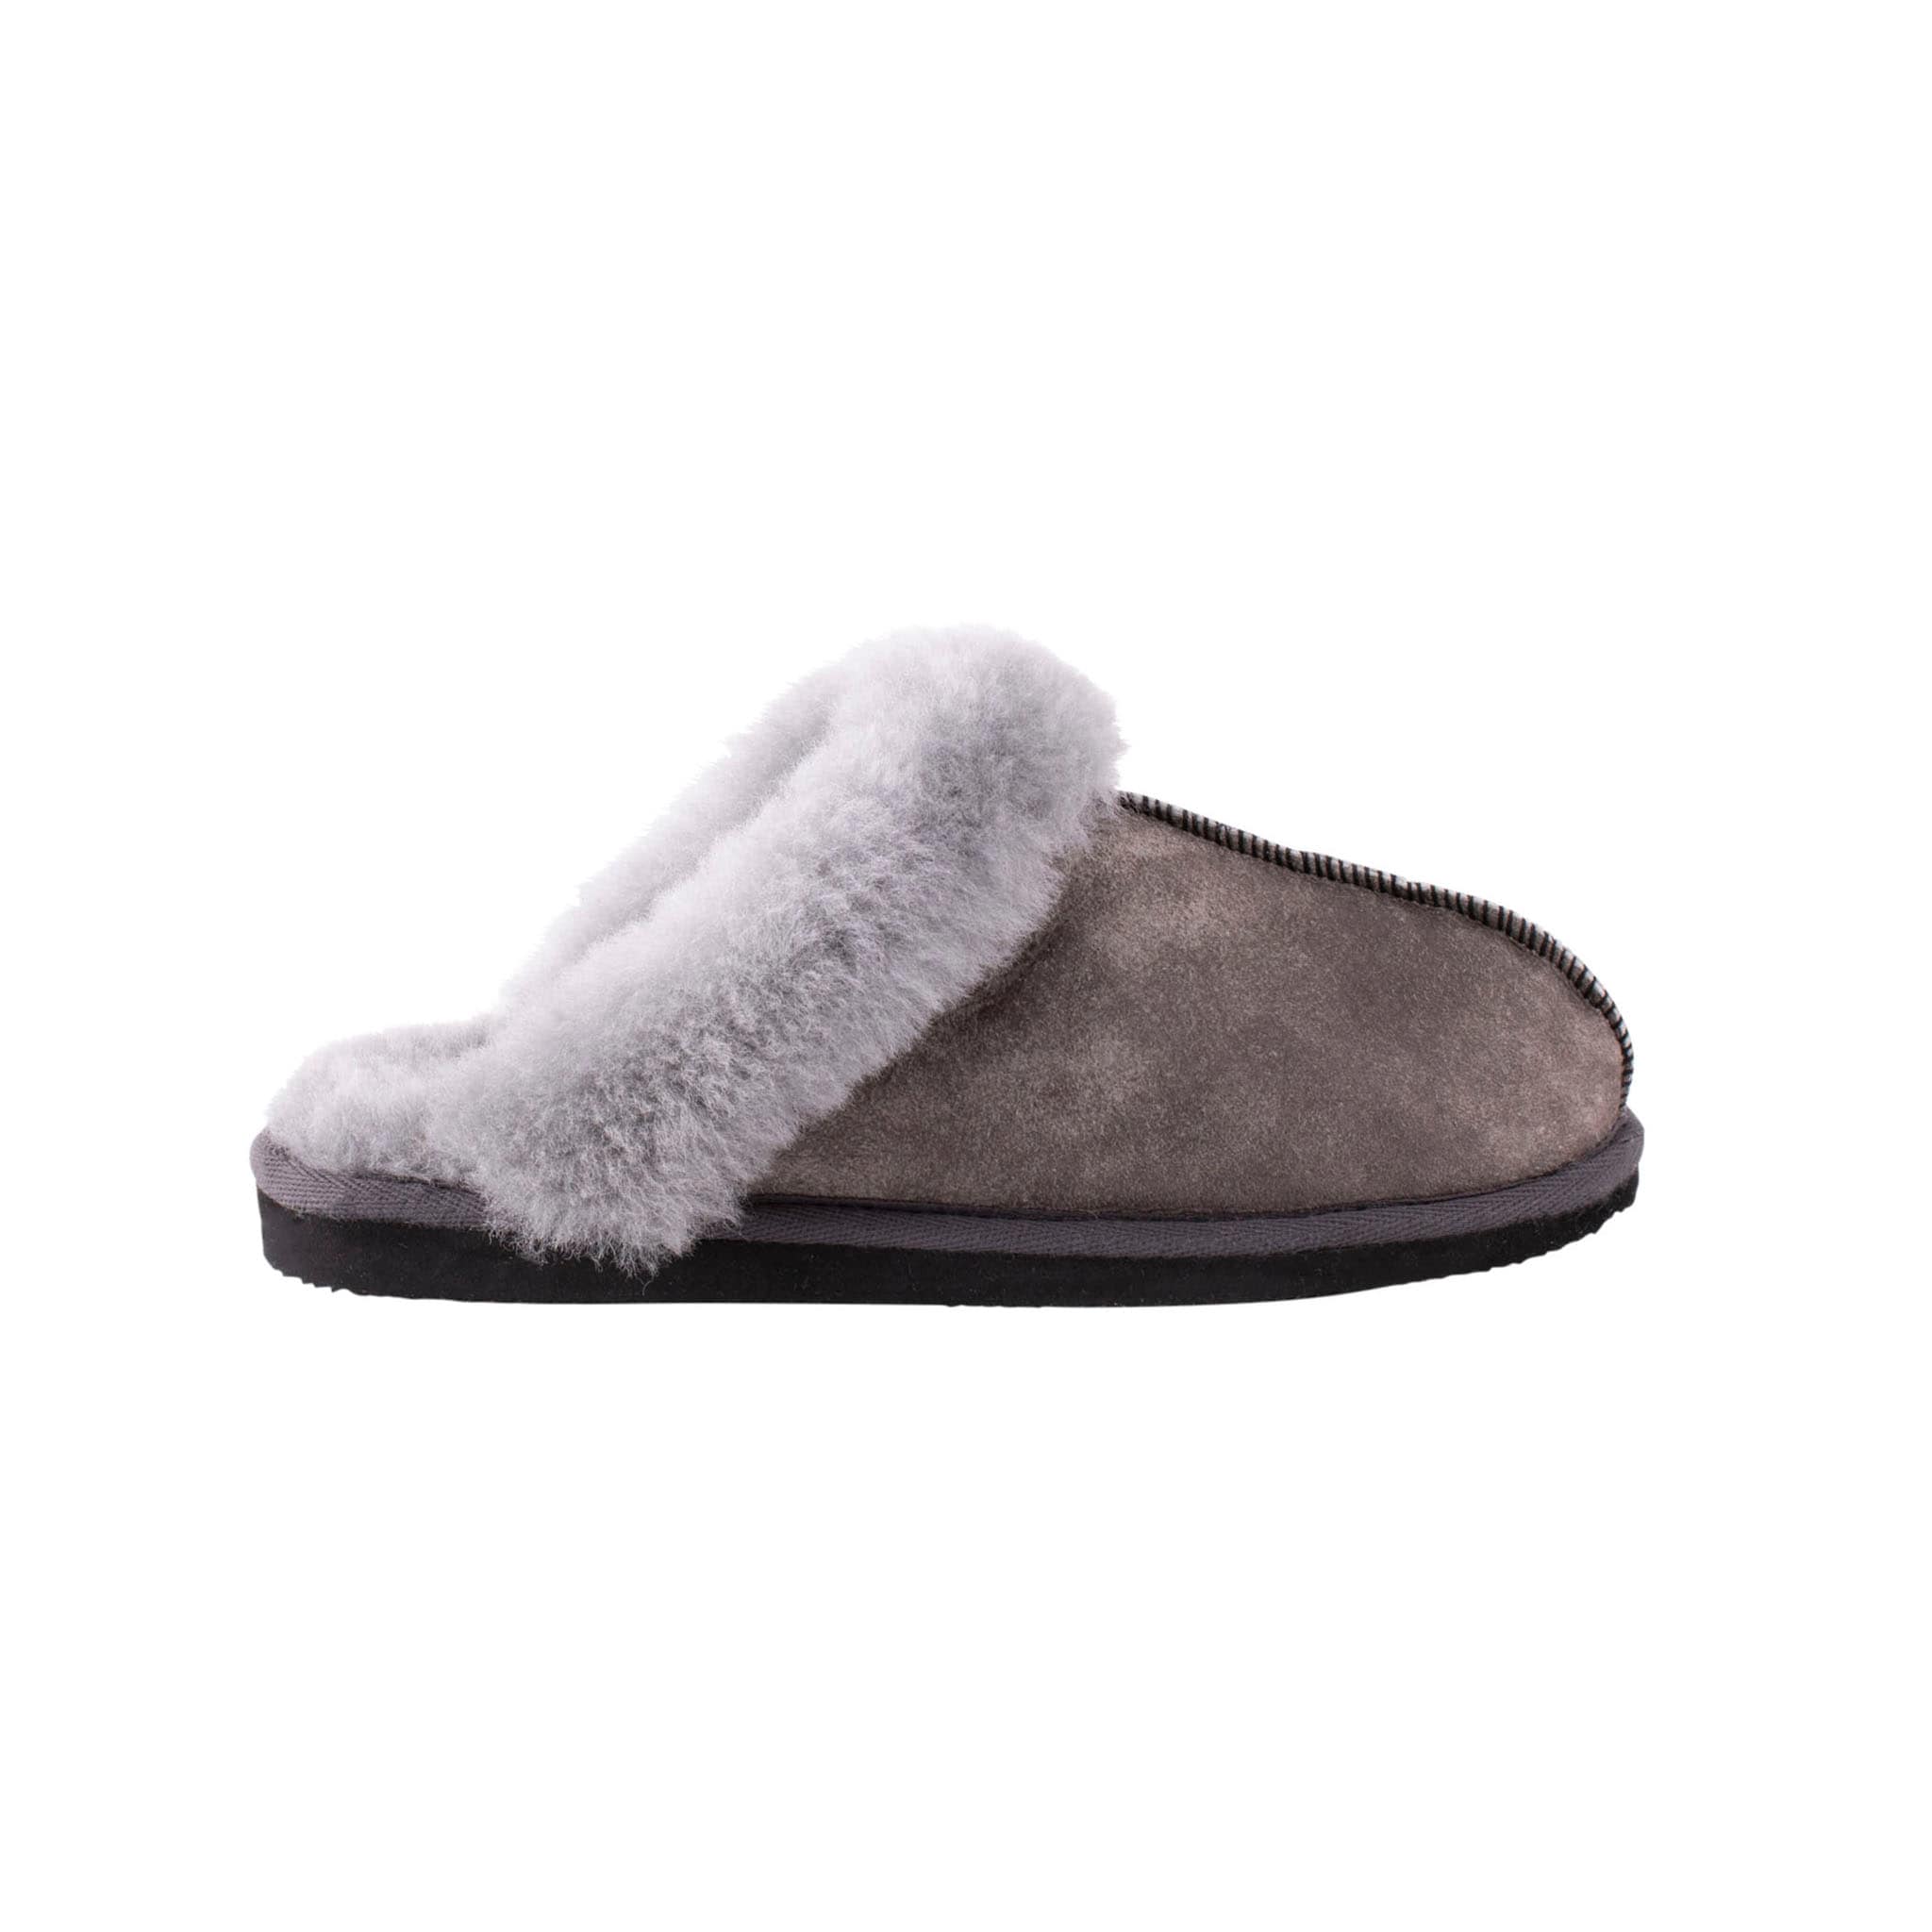 Shepherd Jessica slippers - Antique grey